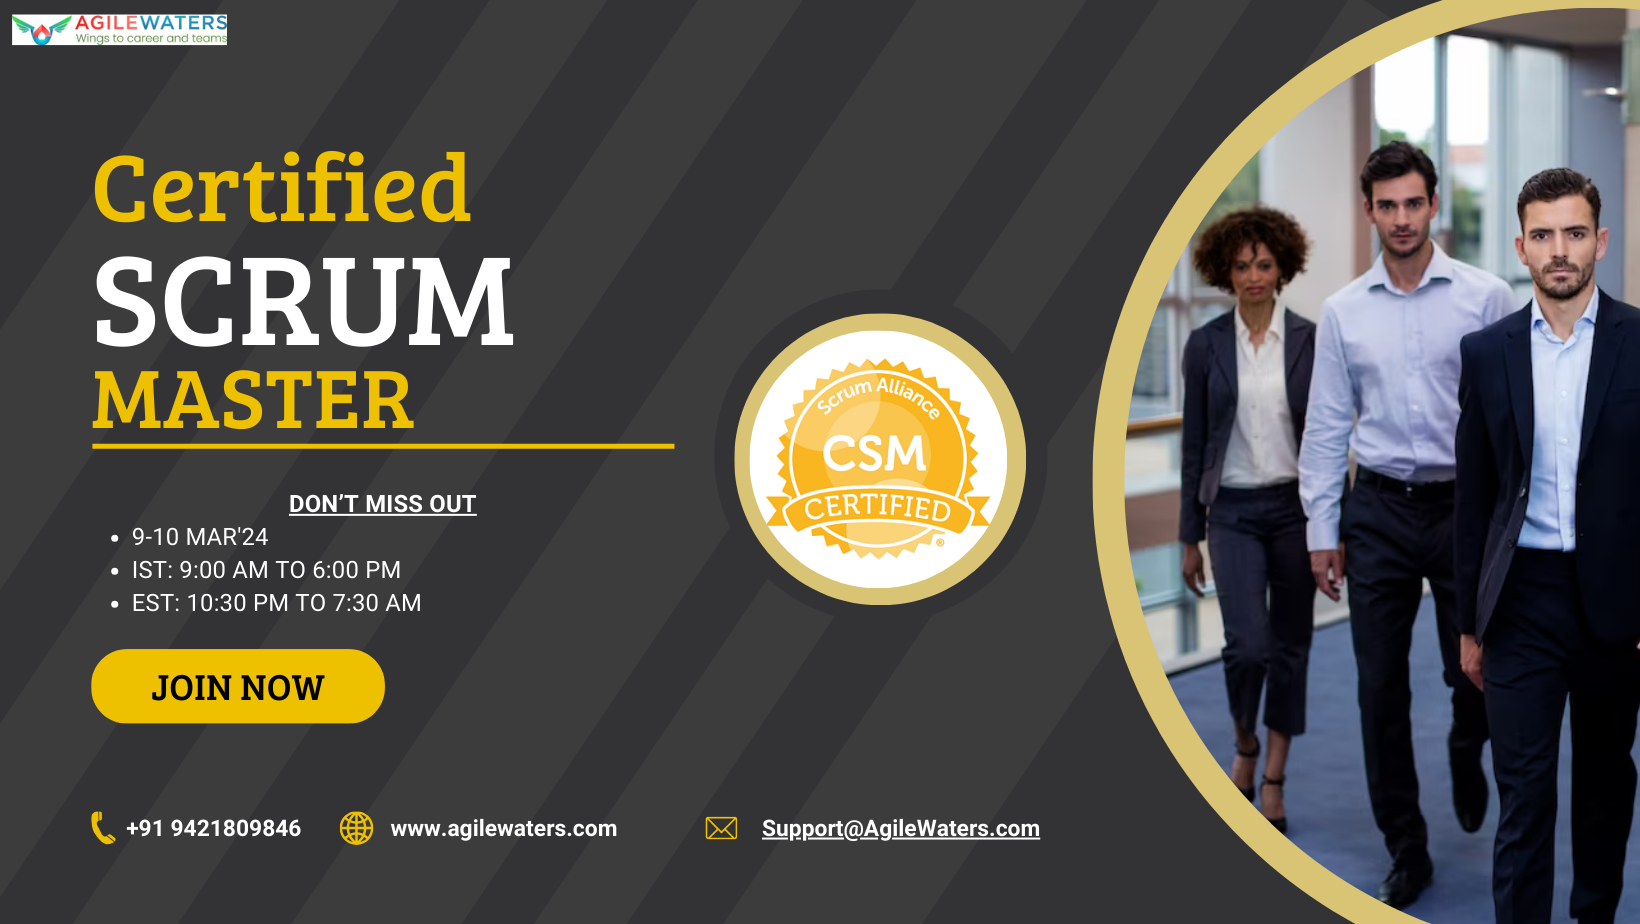 ScrumMaster (CSM) Certification Training, Online Event